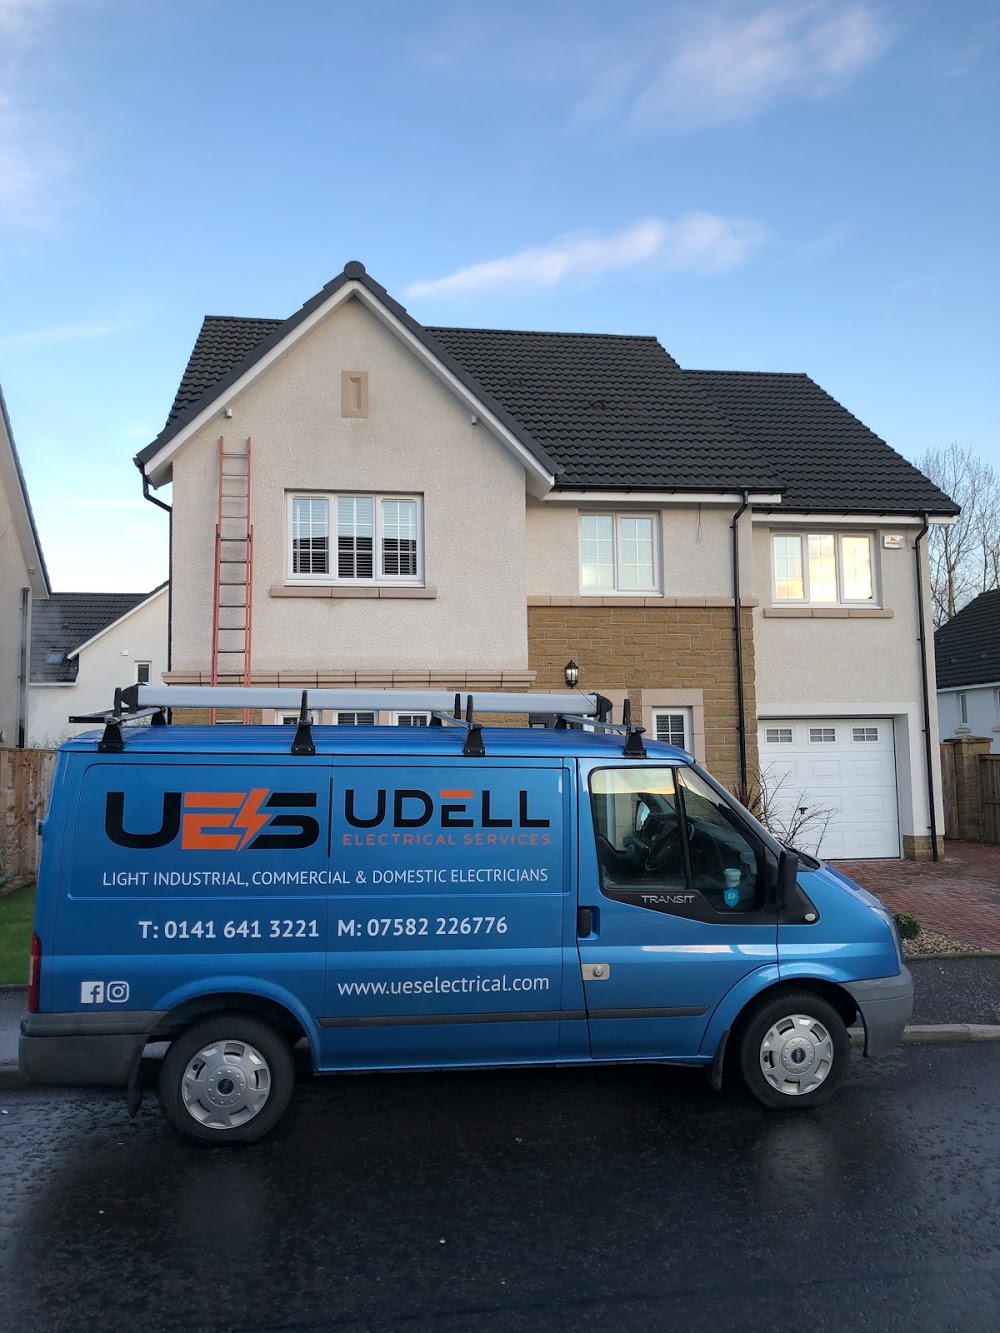 Udell Electrical Services Ltd